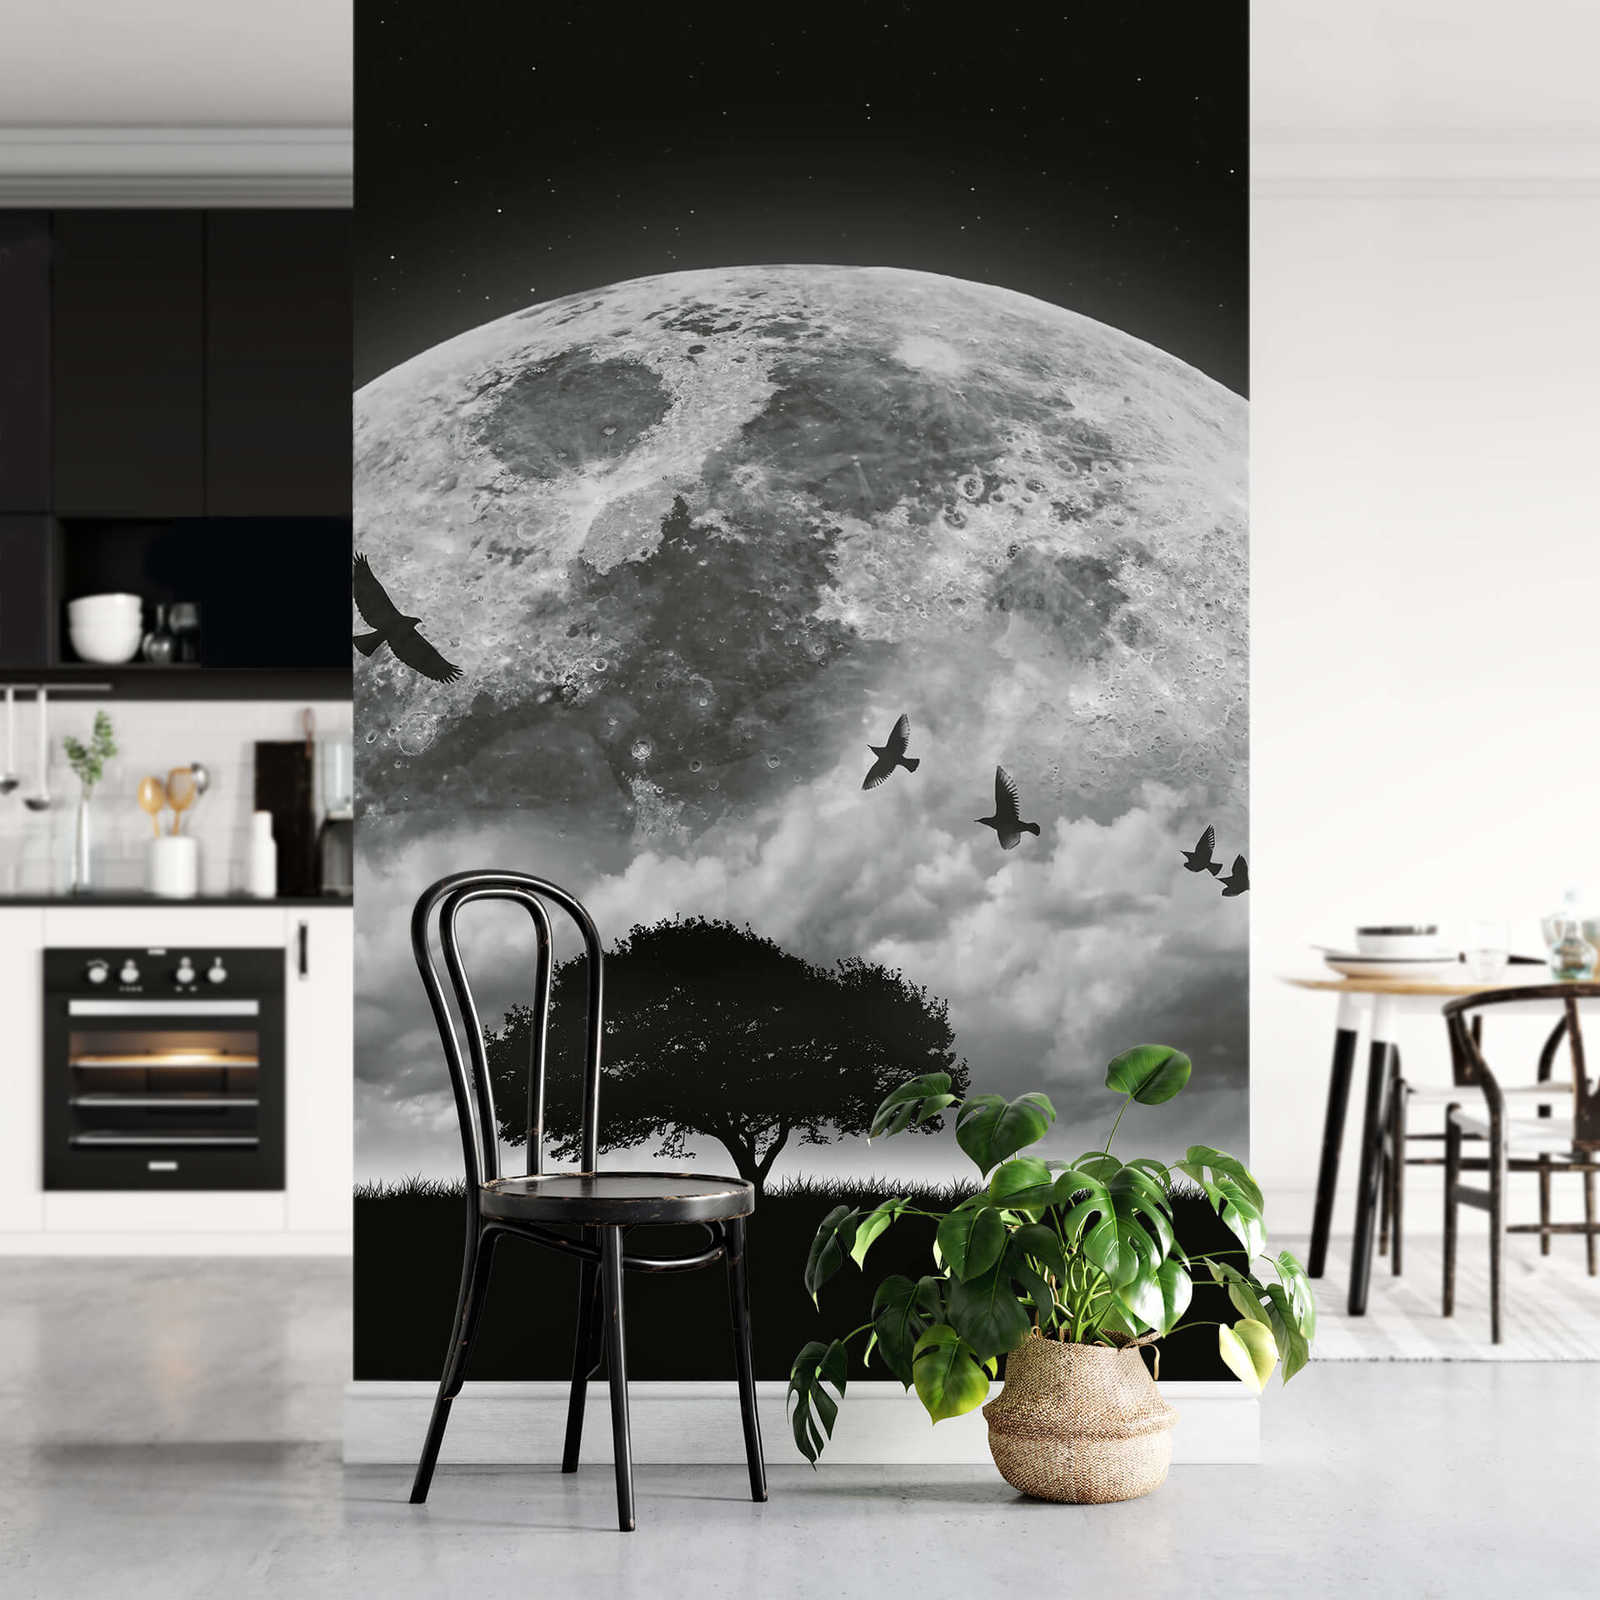             Narrow photo wallpaper abstract universe - black, white
        